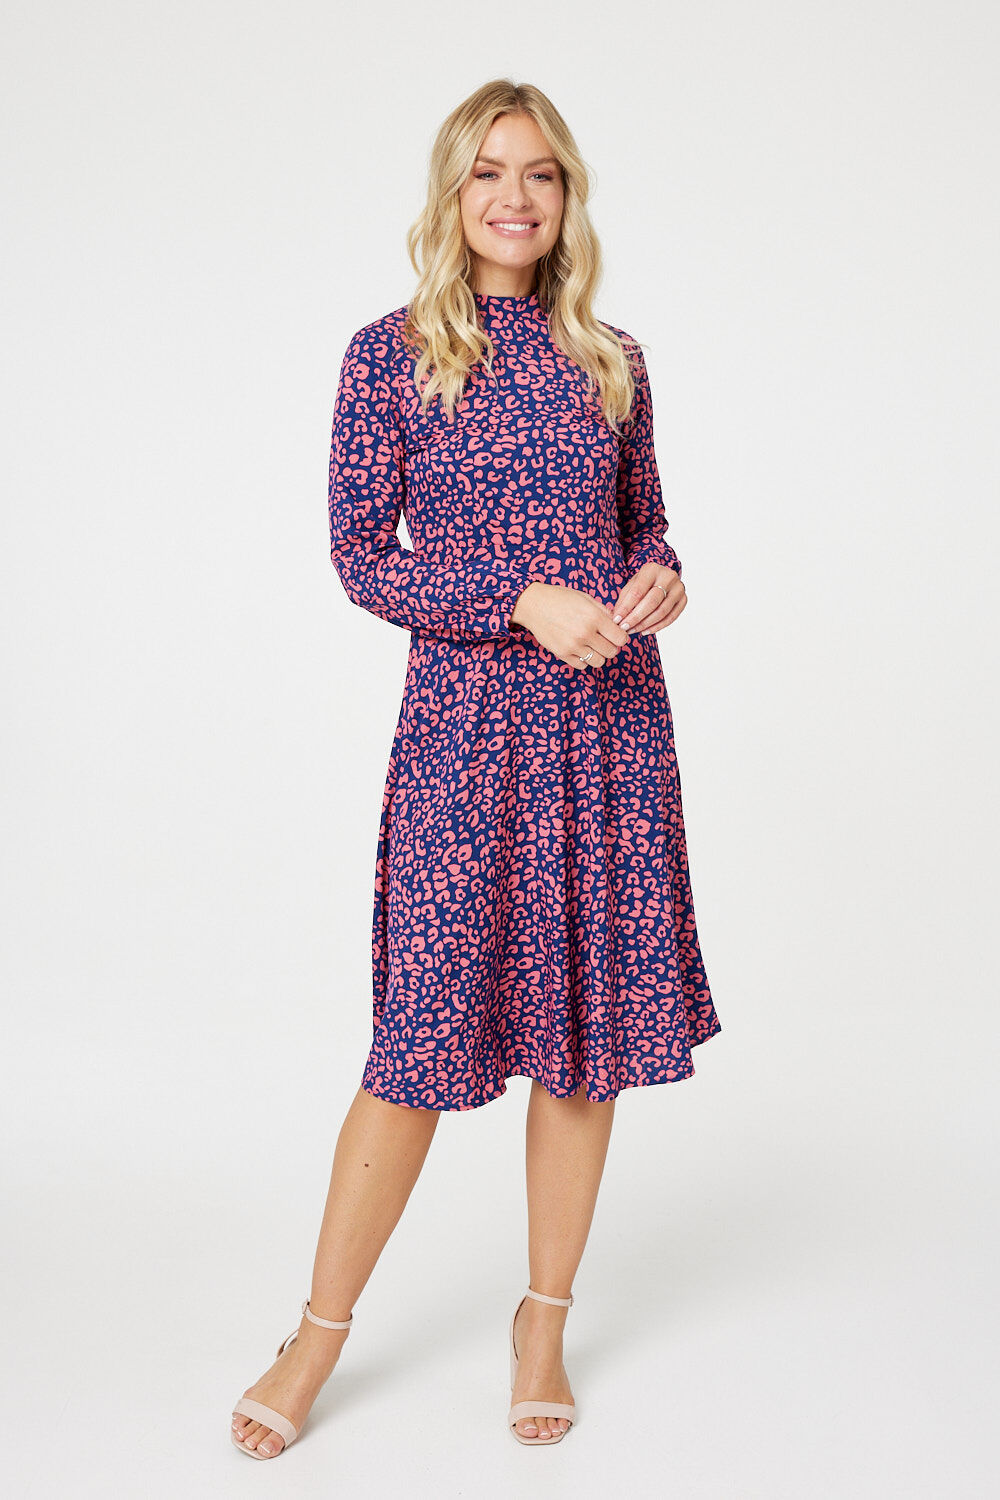 Izabel London Women’s Blue Leopard Print Stylish High Neck Tea Dress, Size: 12